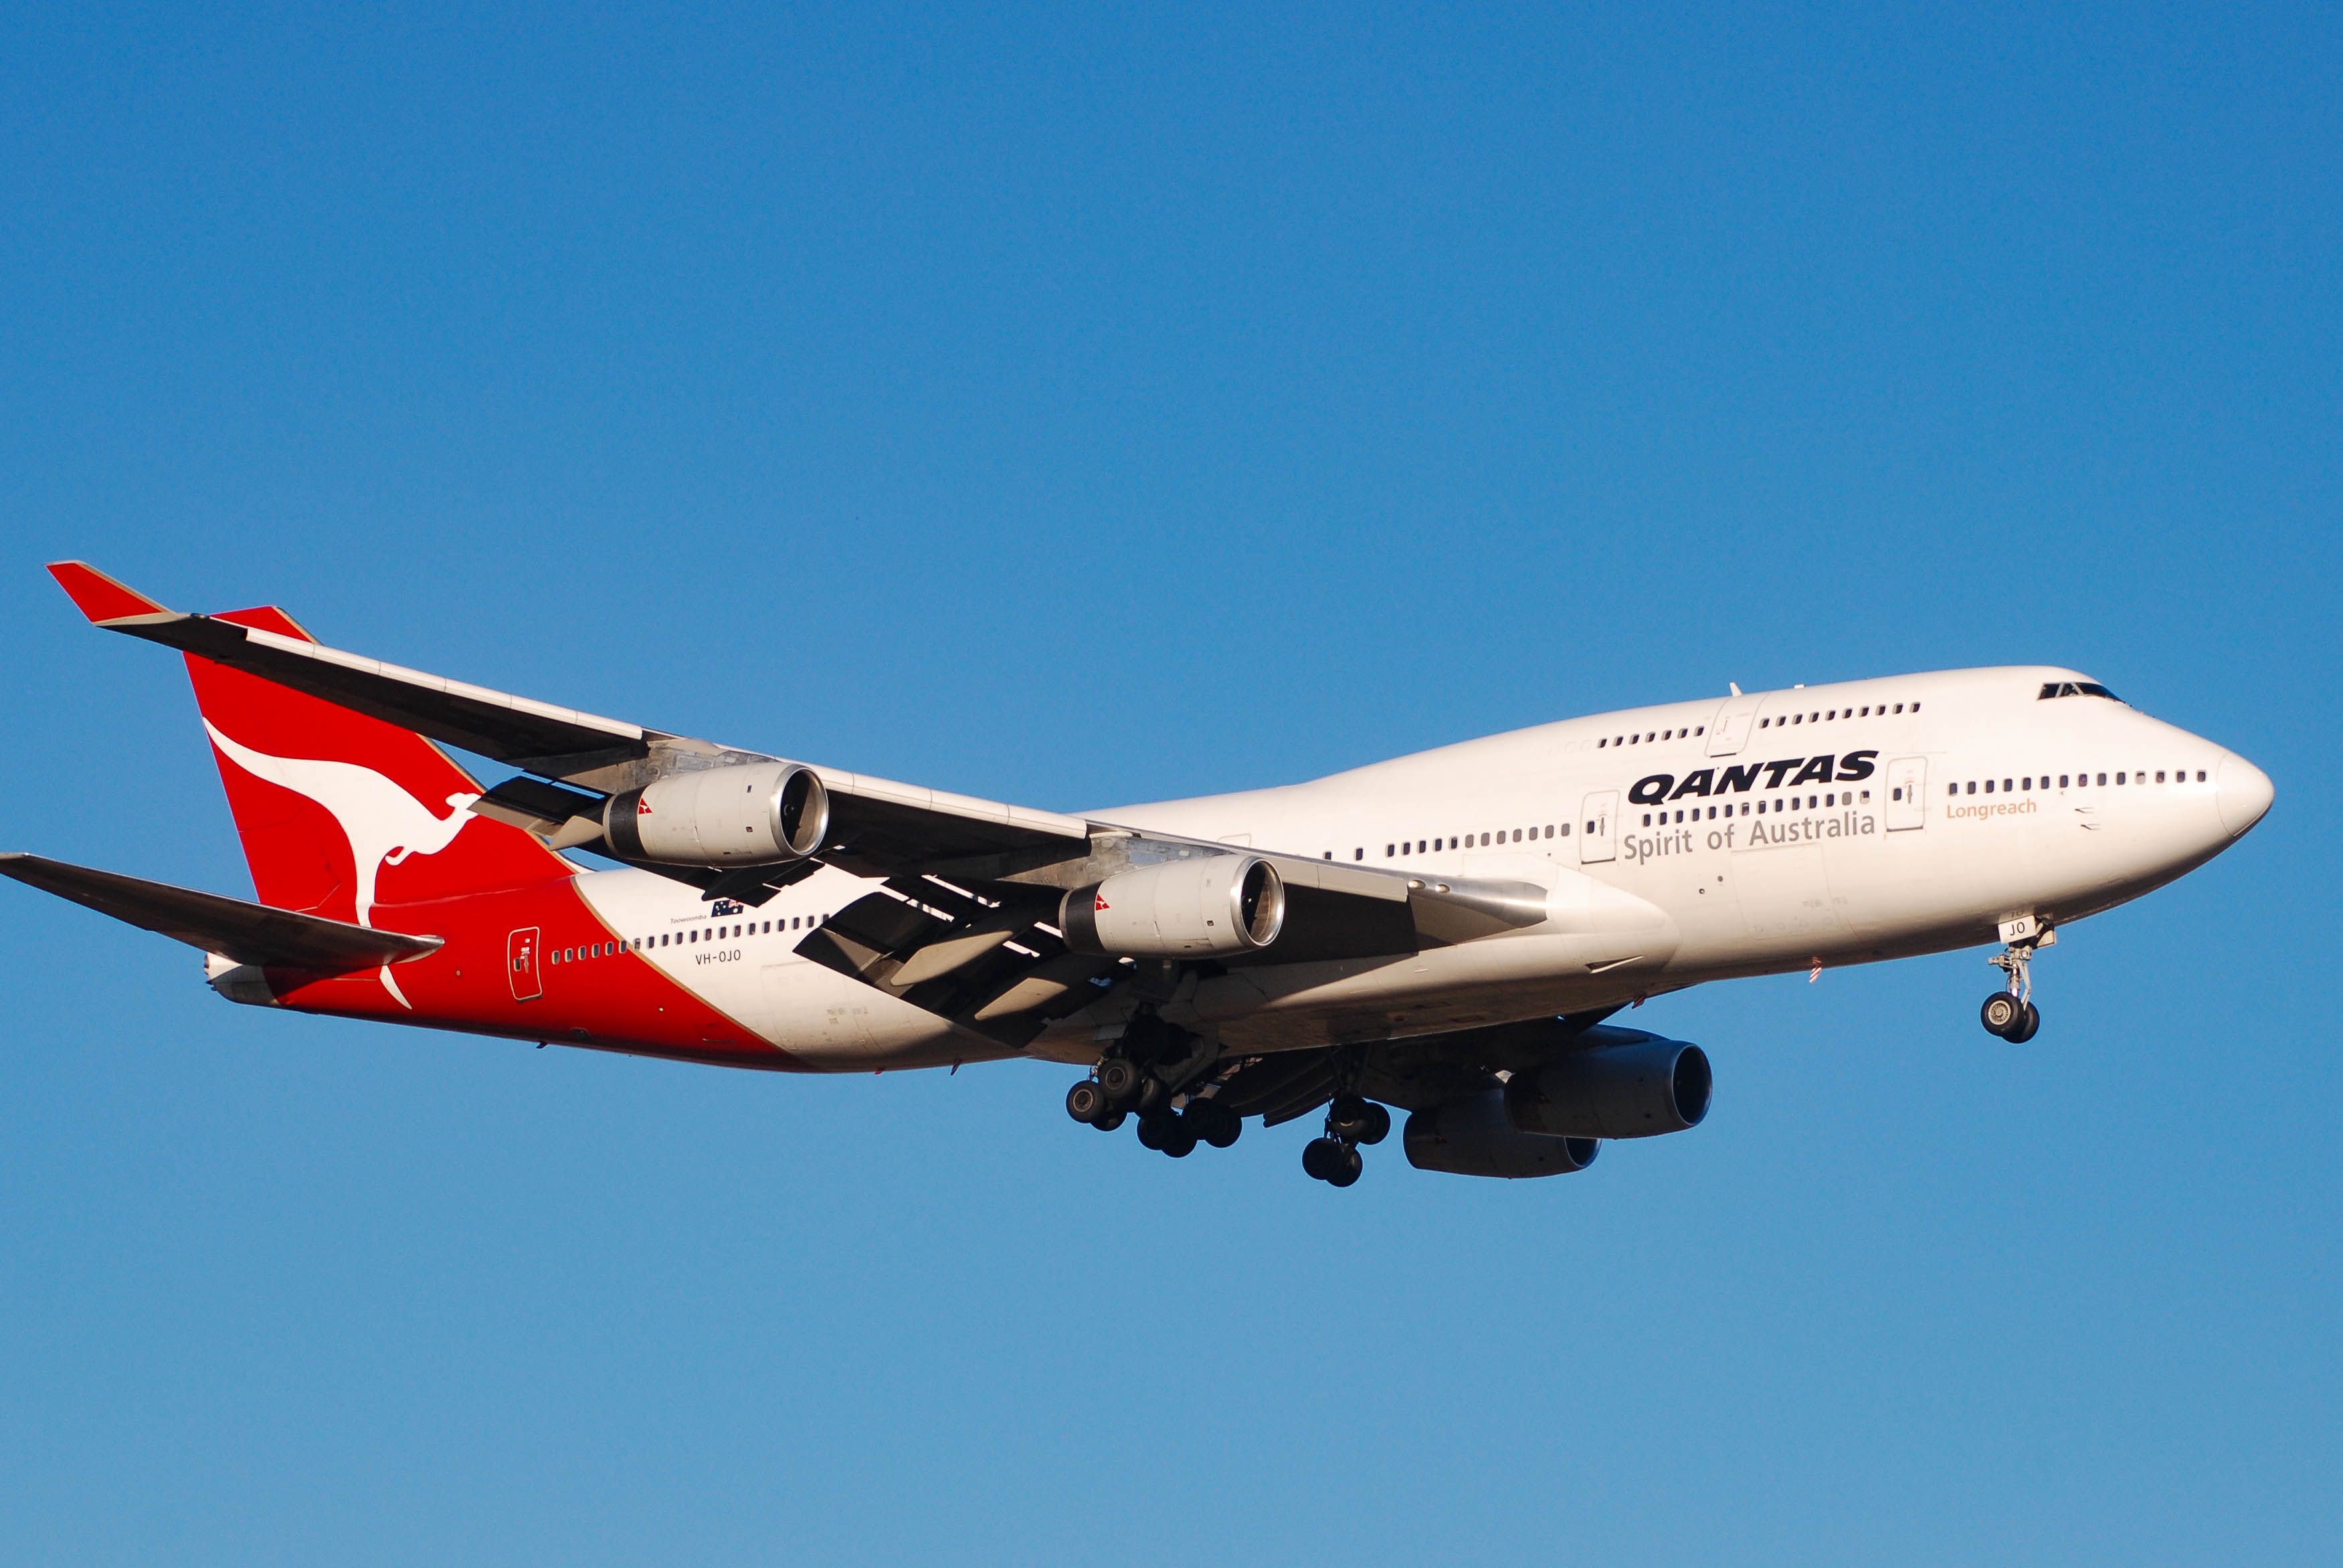 VH-OJO/VHOJO Qantas Boeing 747 Airframe Information - AVSpotters.com